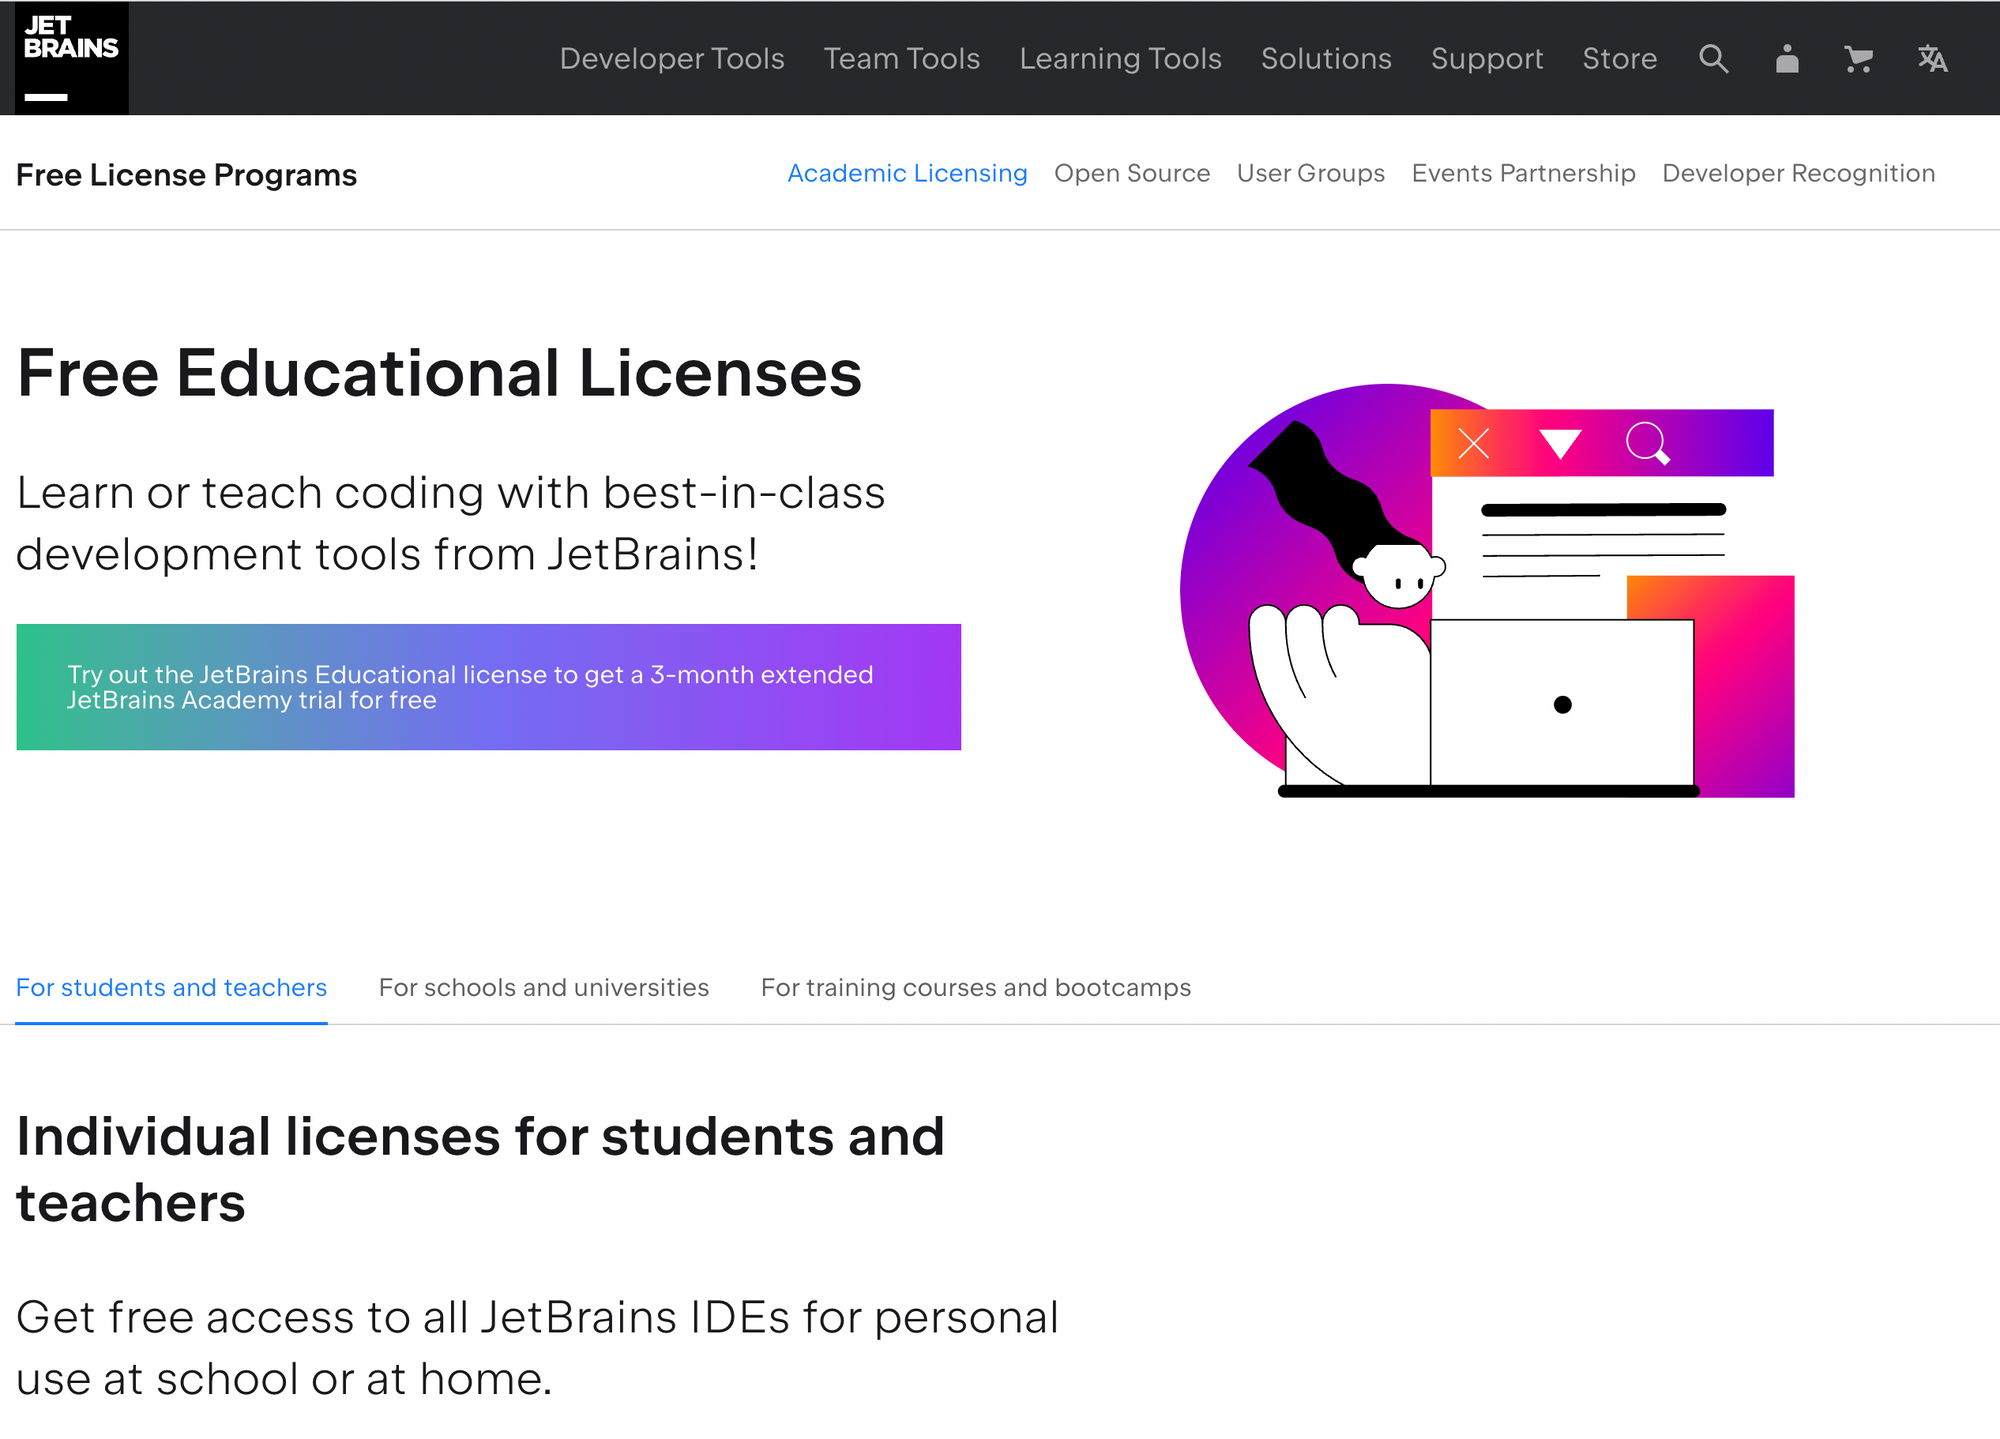 Grab Your Free IntelliJ Idea/JetBrains License 🤩